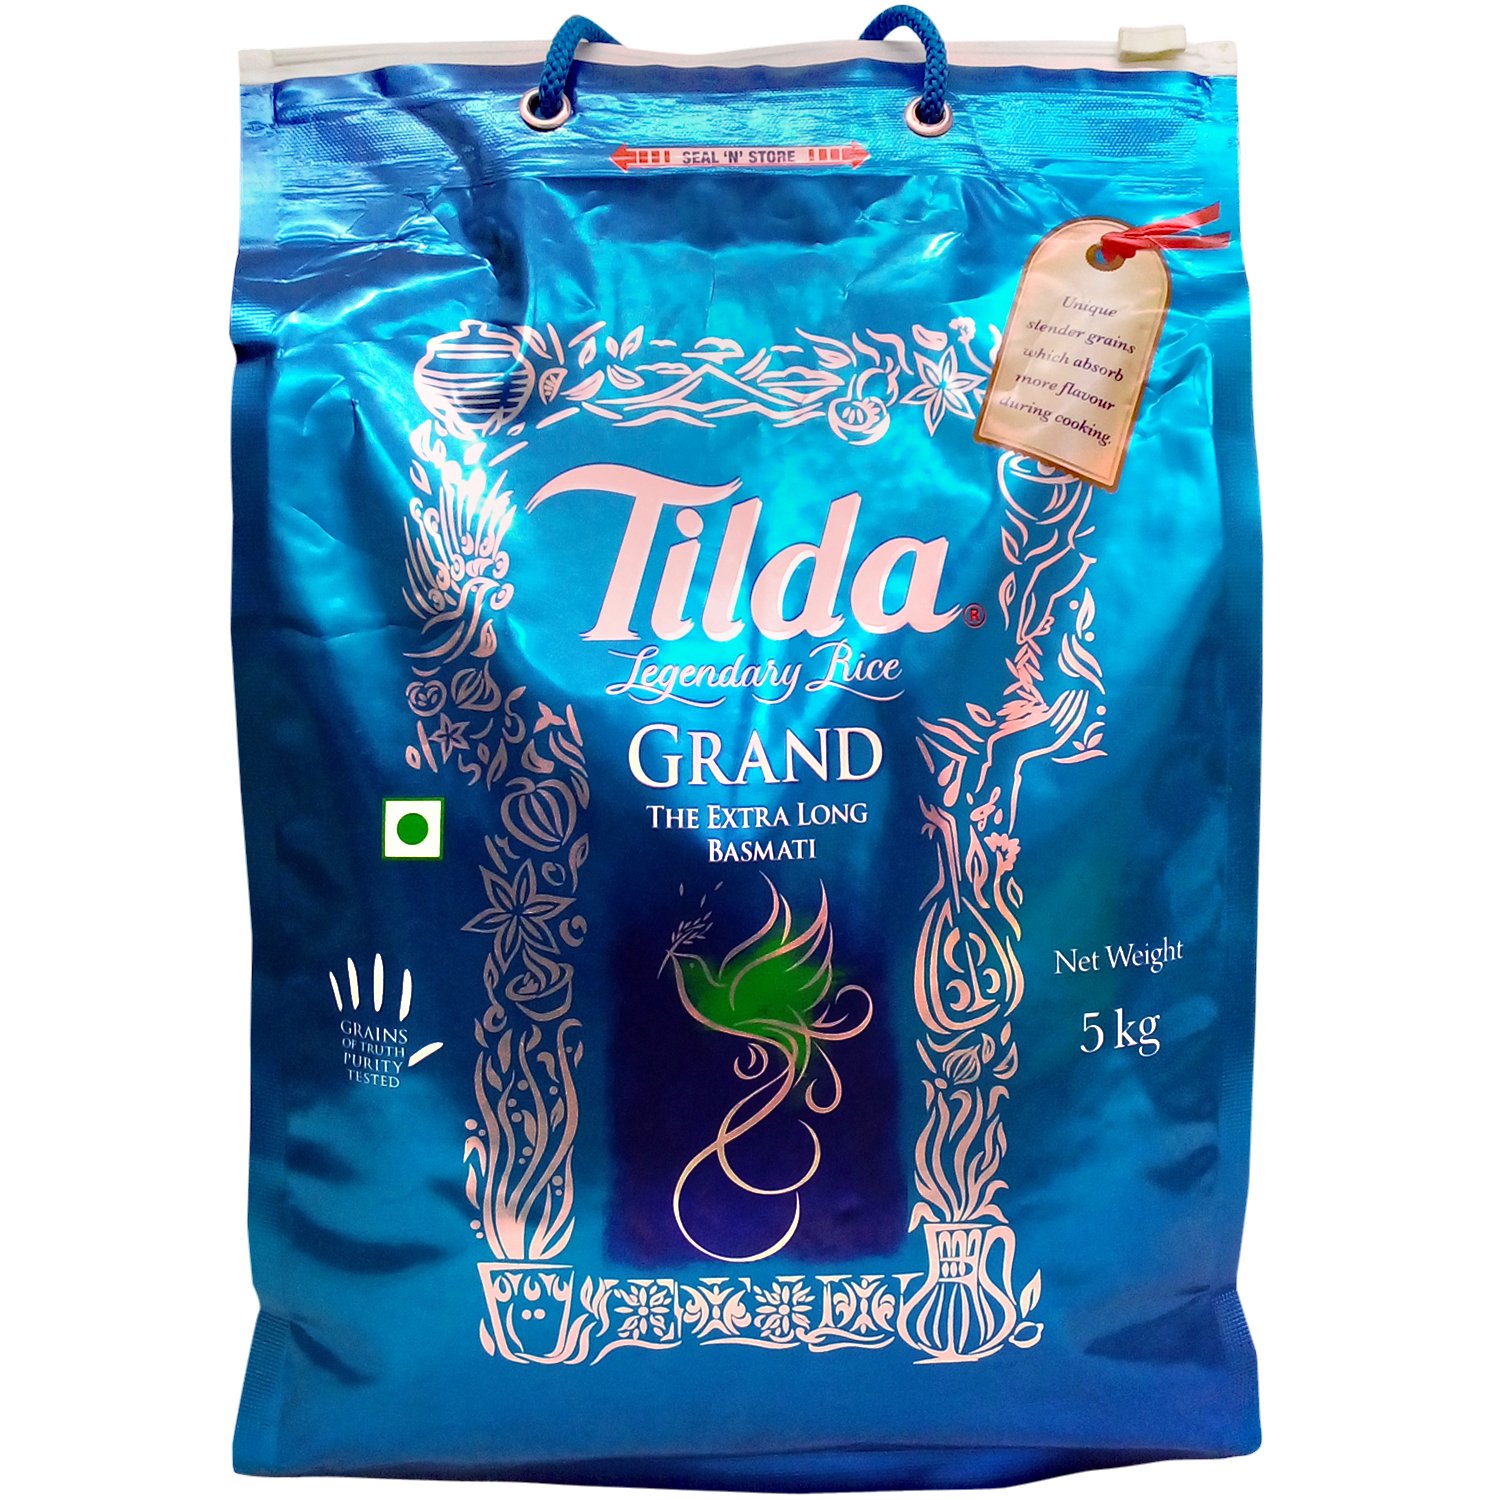 Tilda Basmati Rice Grand Image